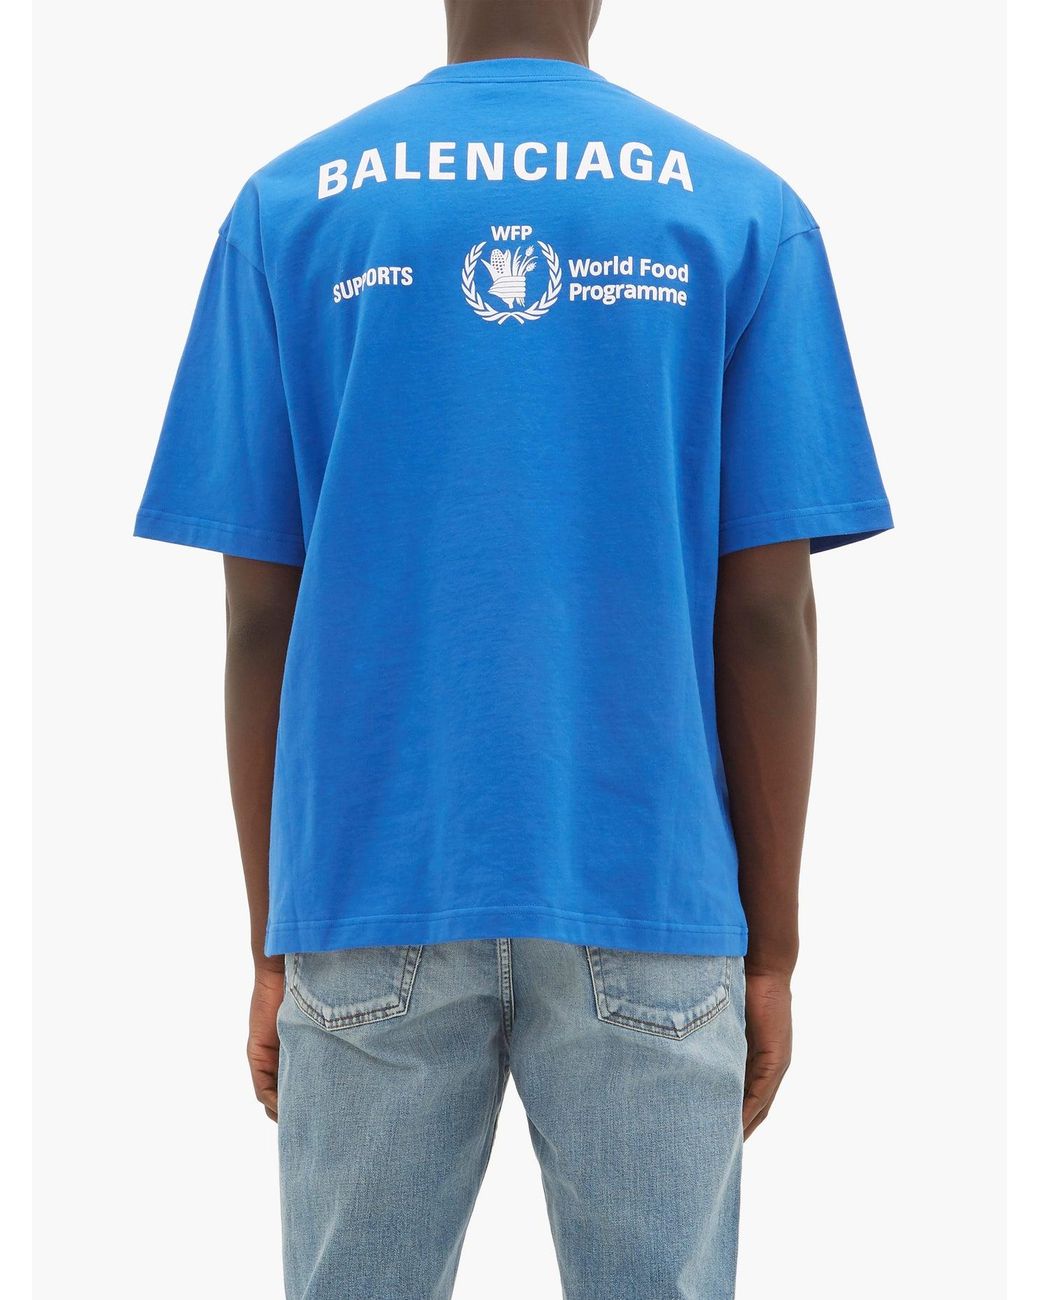 Balenciaga WFP Cotton Tshirt  Farfetch